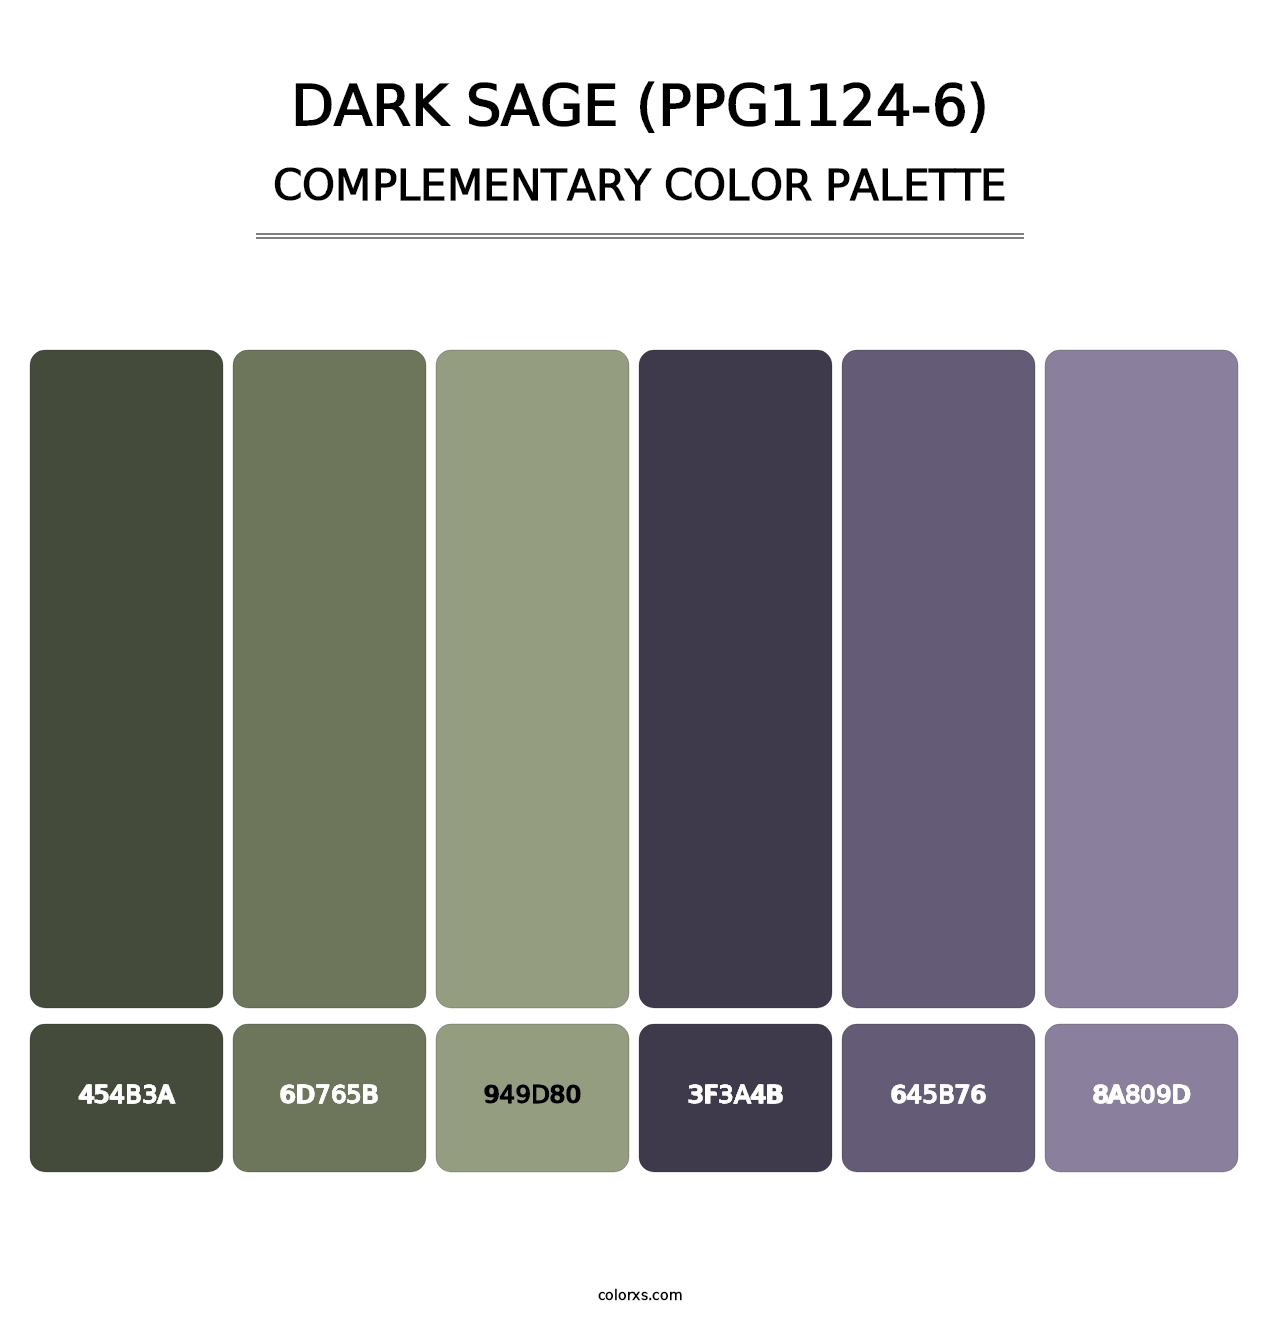 Dark Sage (PPG1124-6) - Complementary Color Palette